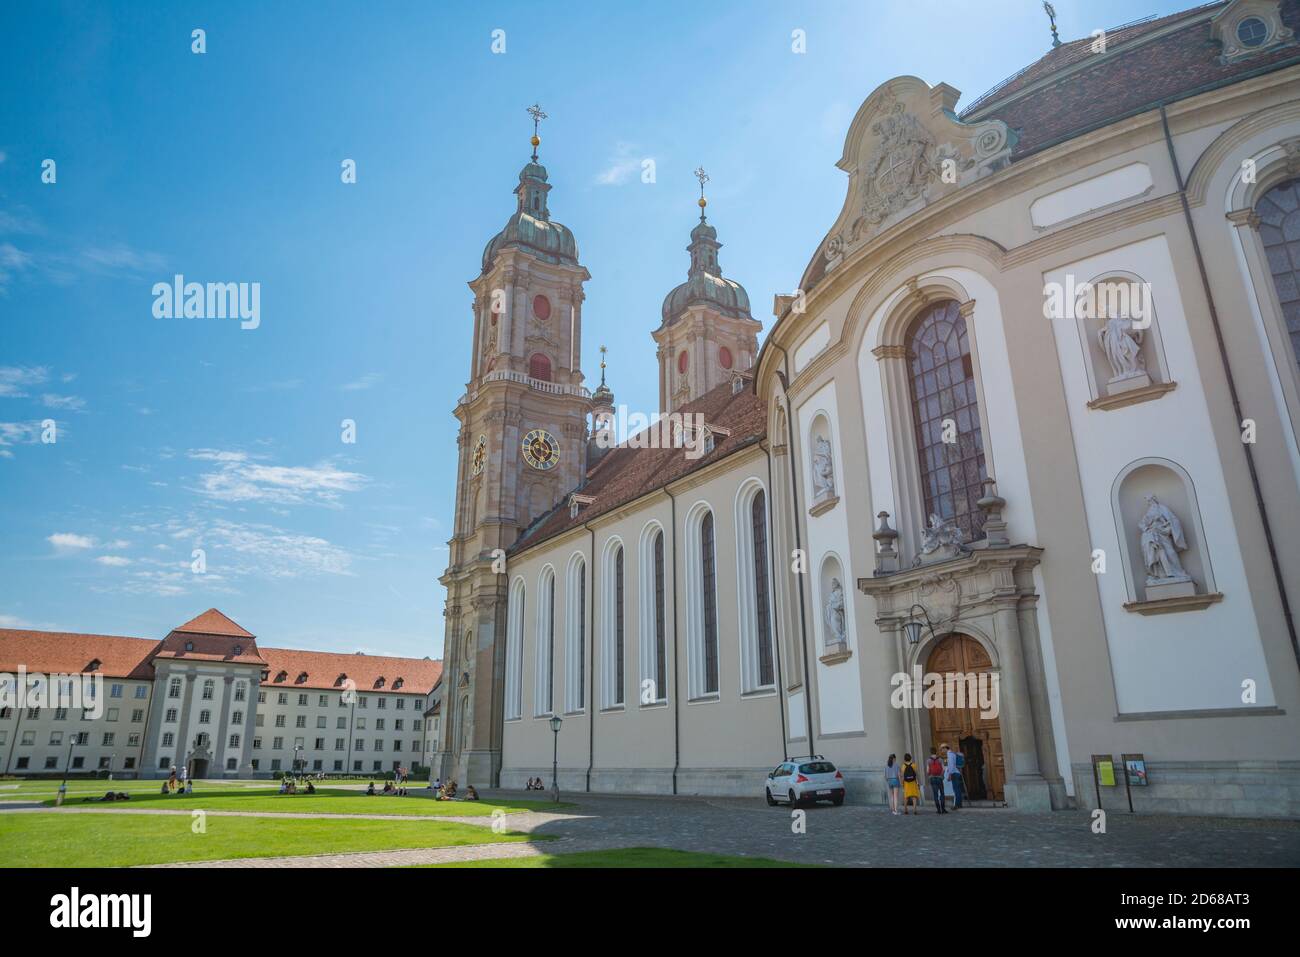 Abbey of St. Gallen, Switzerland Stock Photo